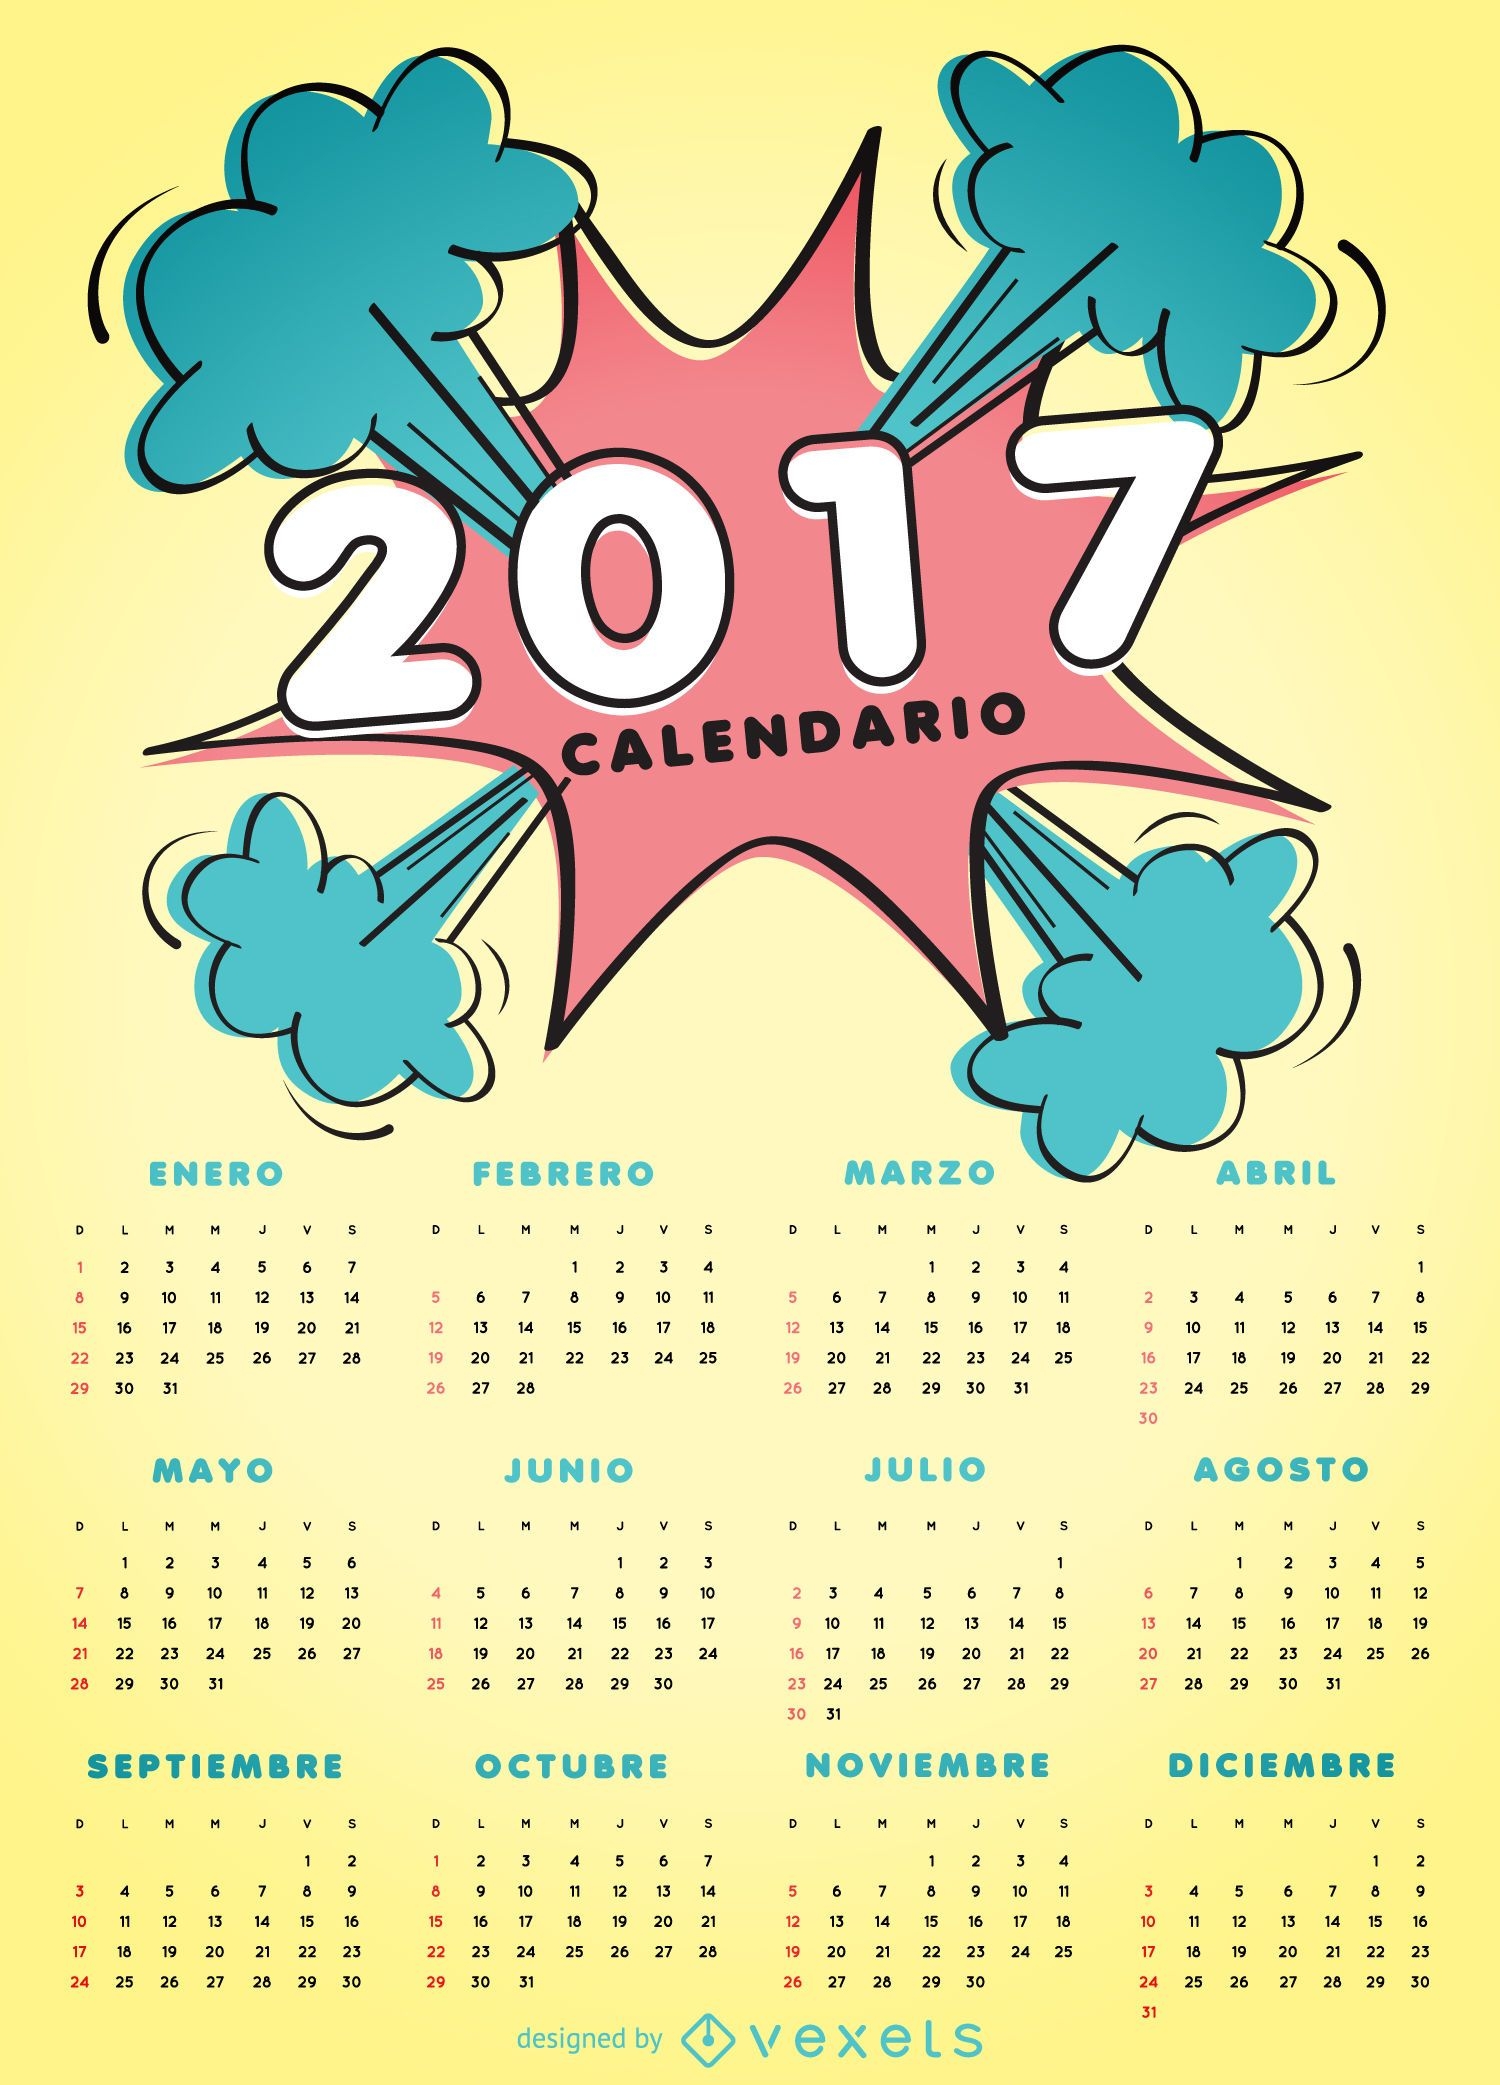 Calendario estilo comic 2017 en espa?ol